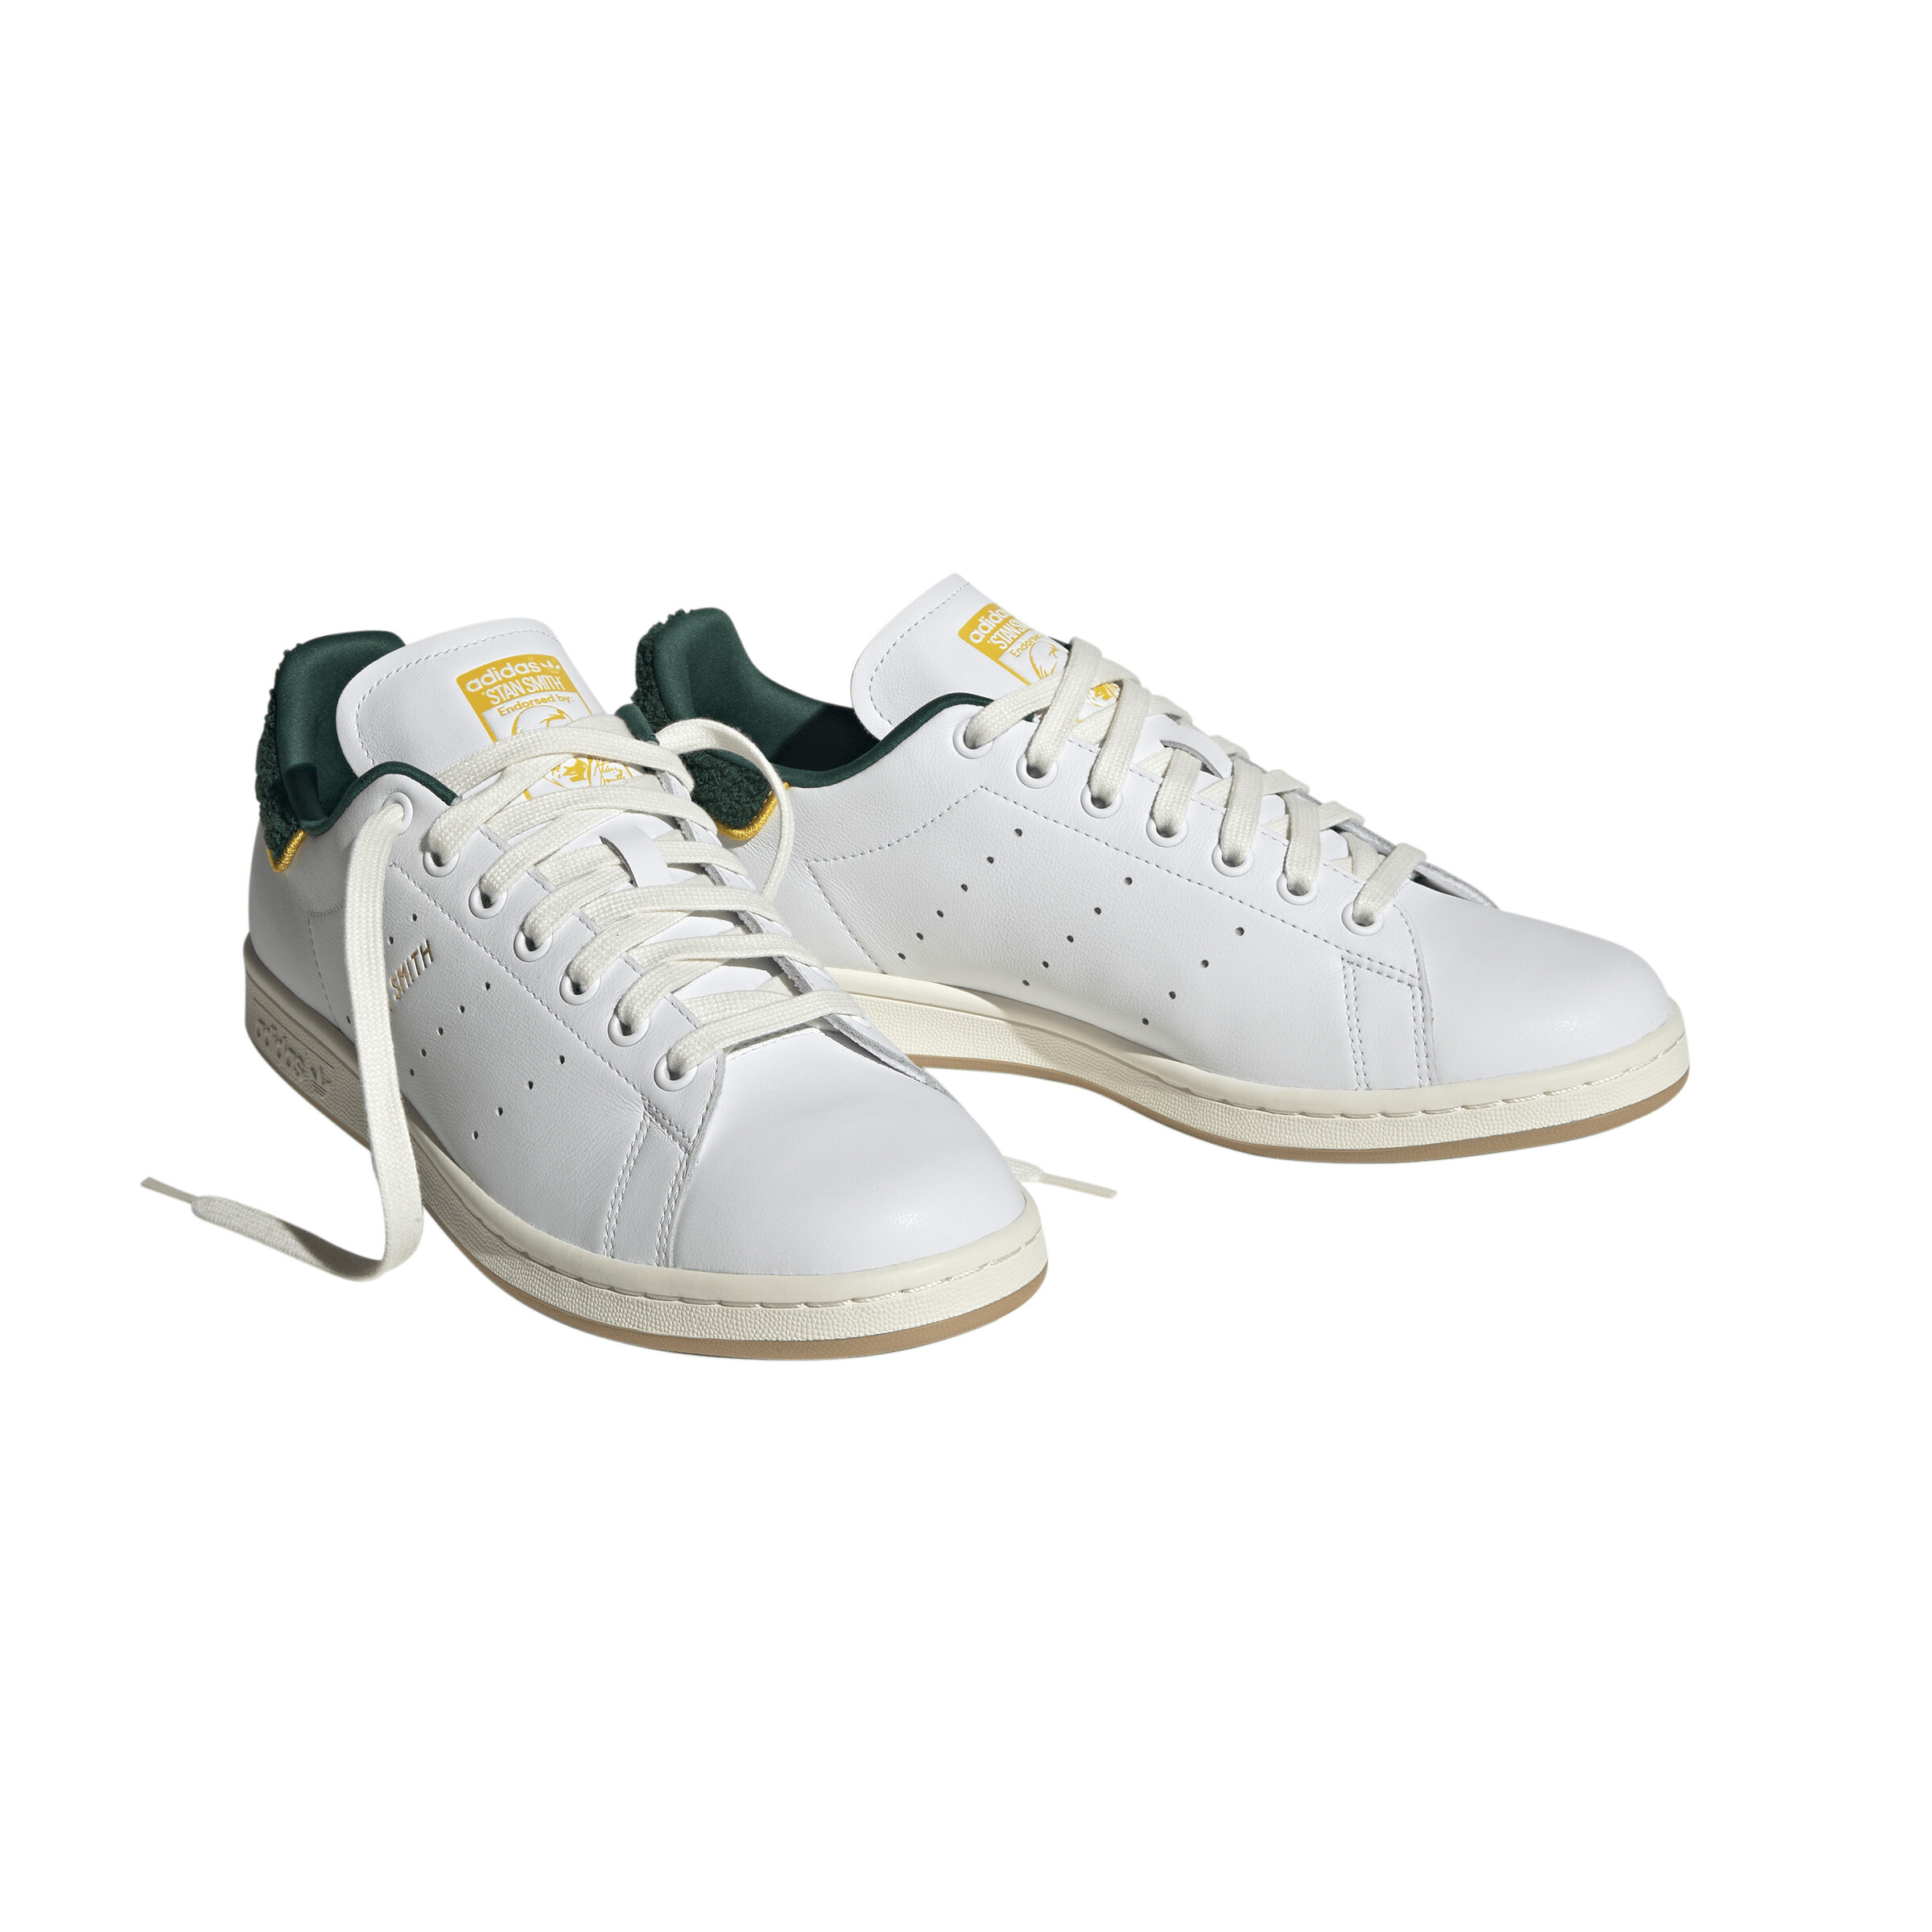 Incaltaminte Barbati adidas Originals Stan Smith WhiteOff-WhiteDark Green